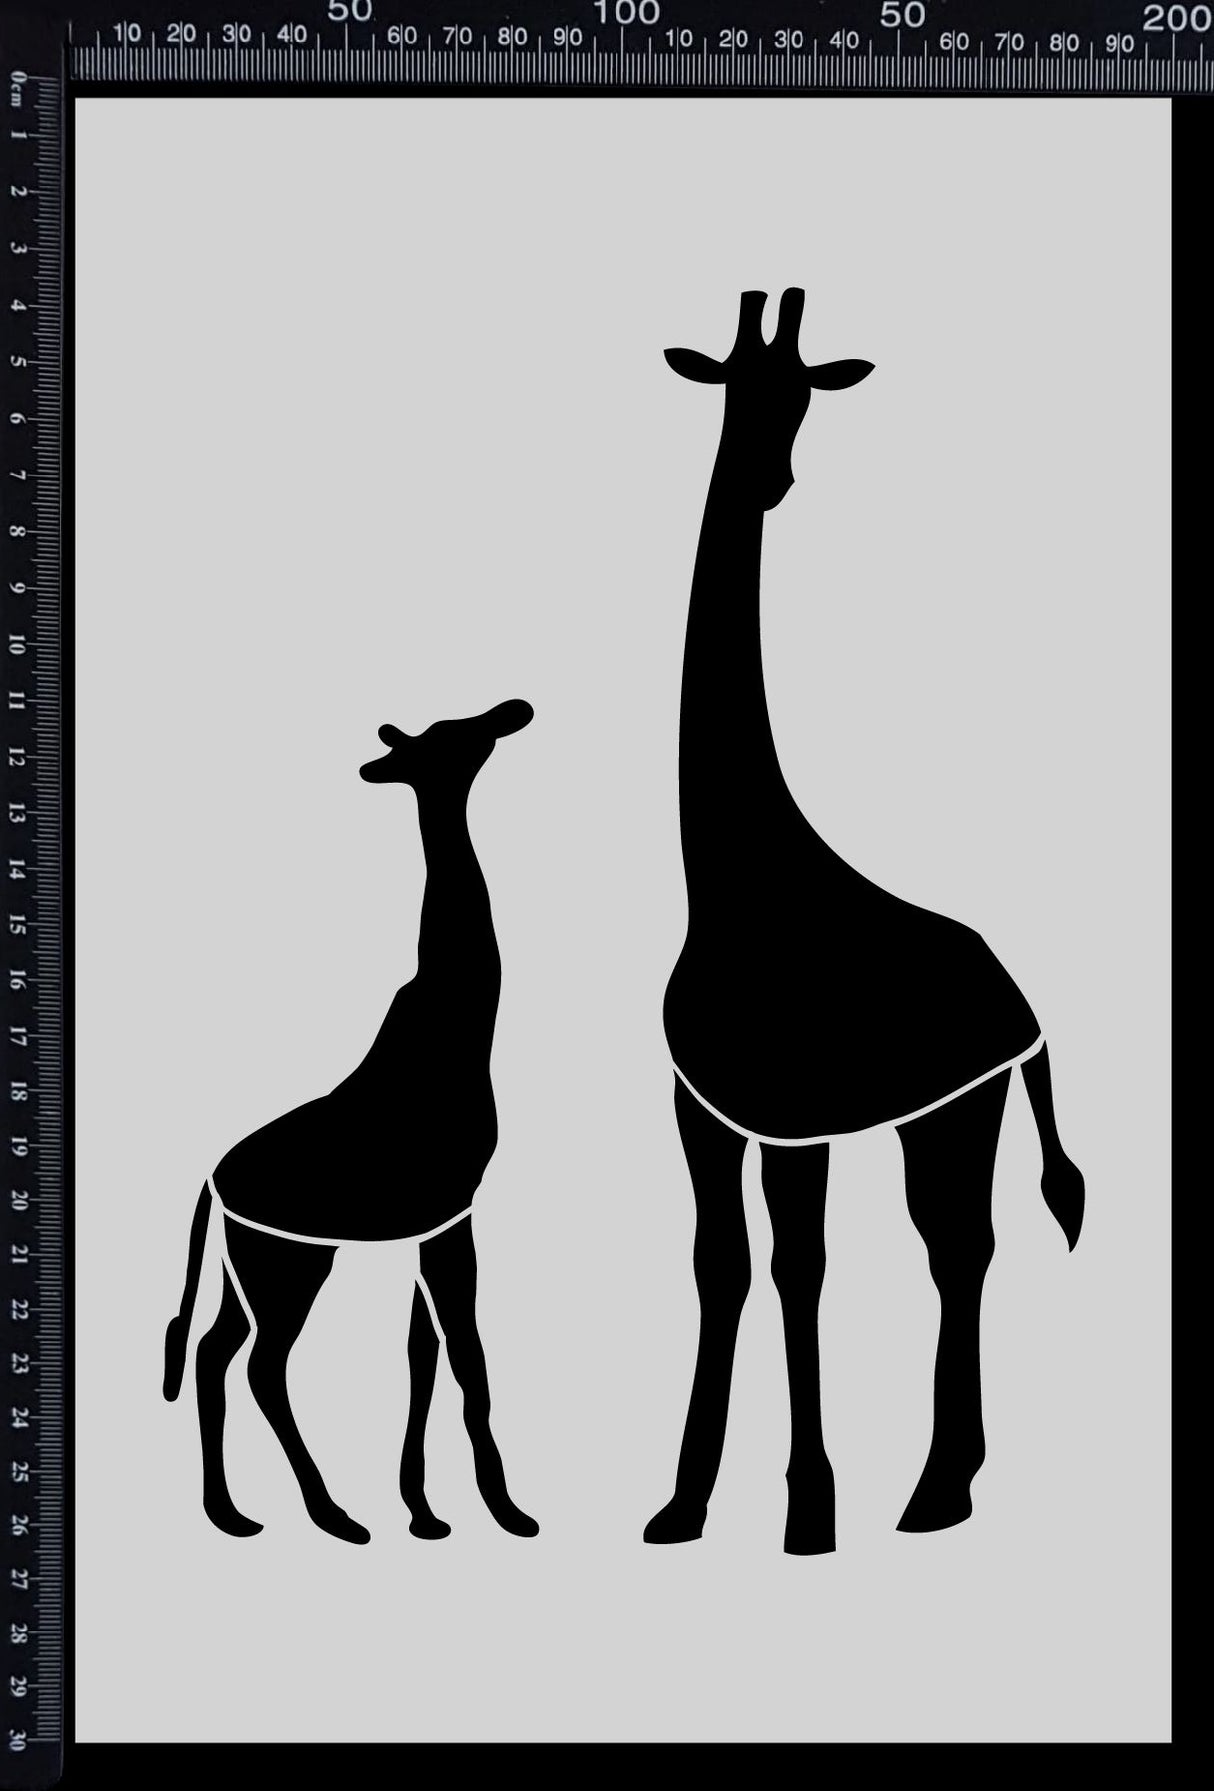 Giraffes - Stencil - 200mm x 300mm